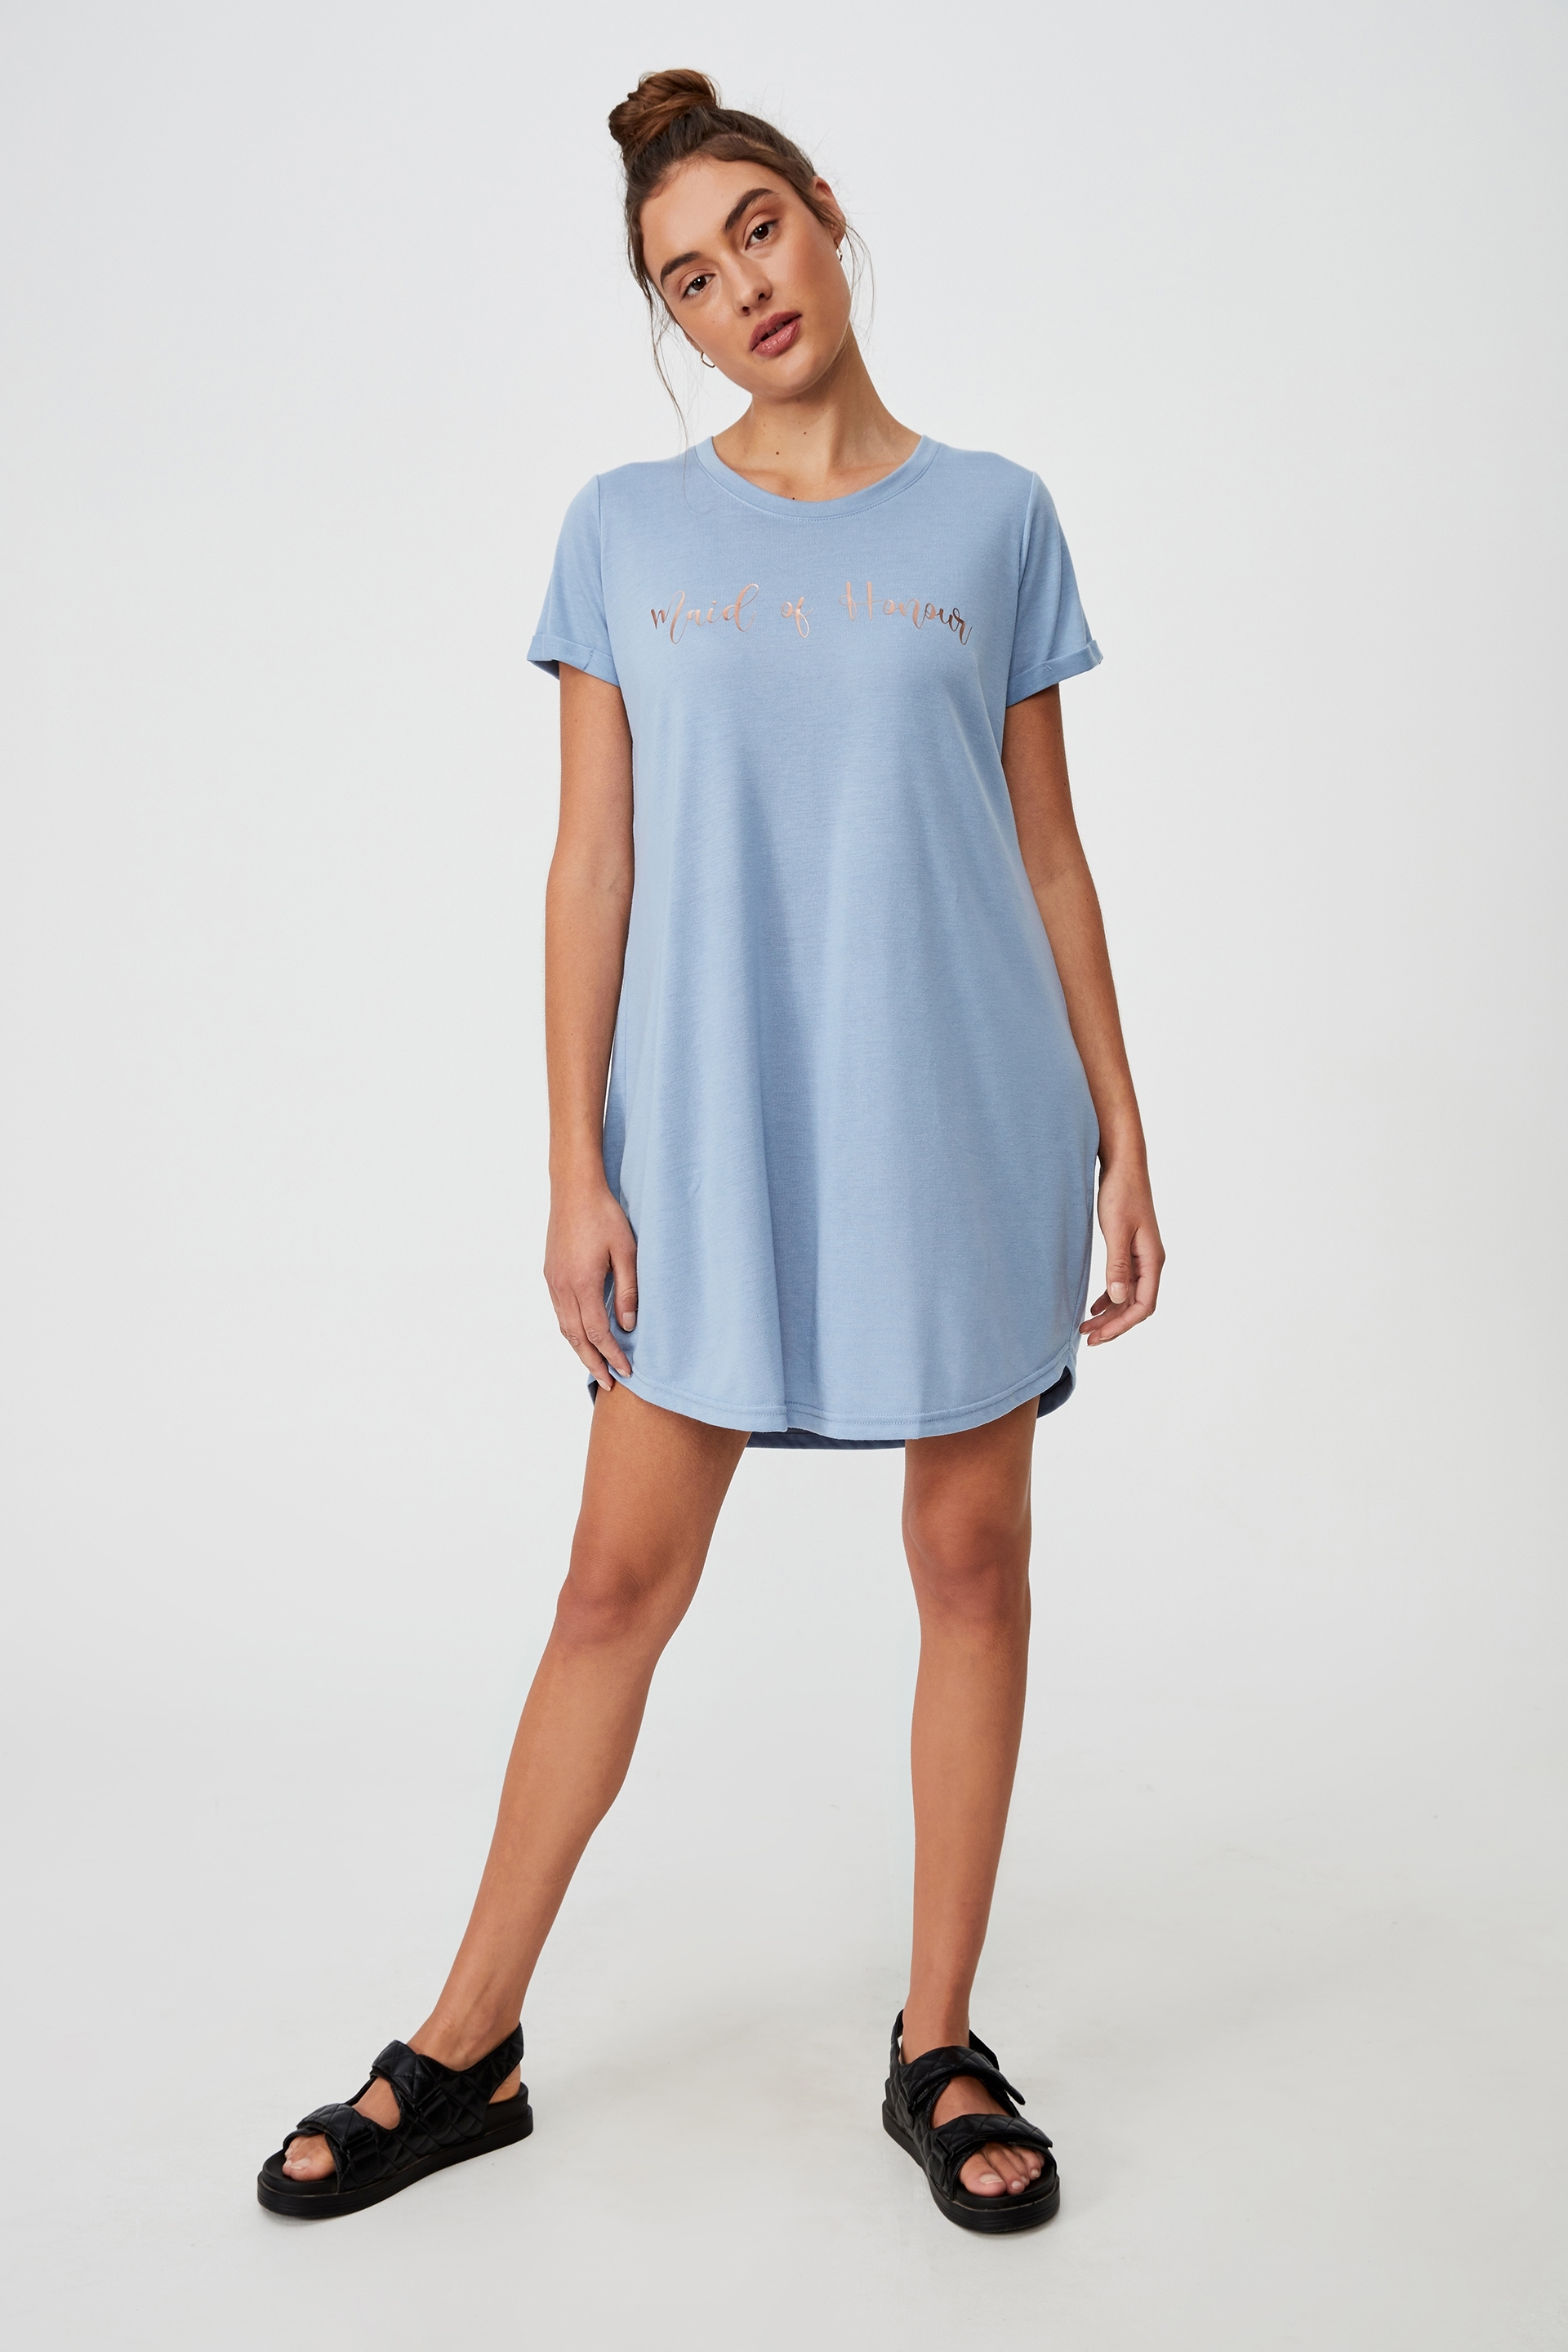 Cotton On Women - Personalised Tina Tshirt Dress - Wave washed blue